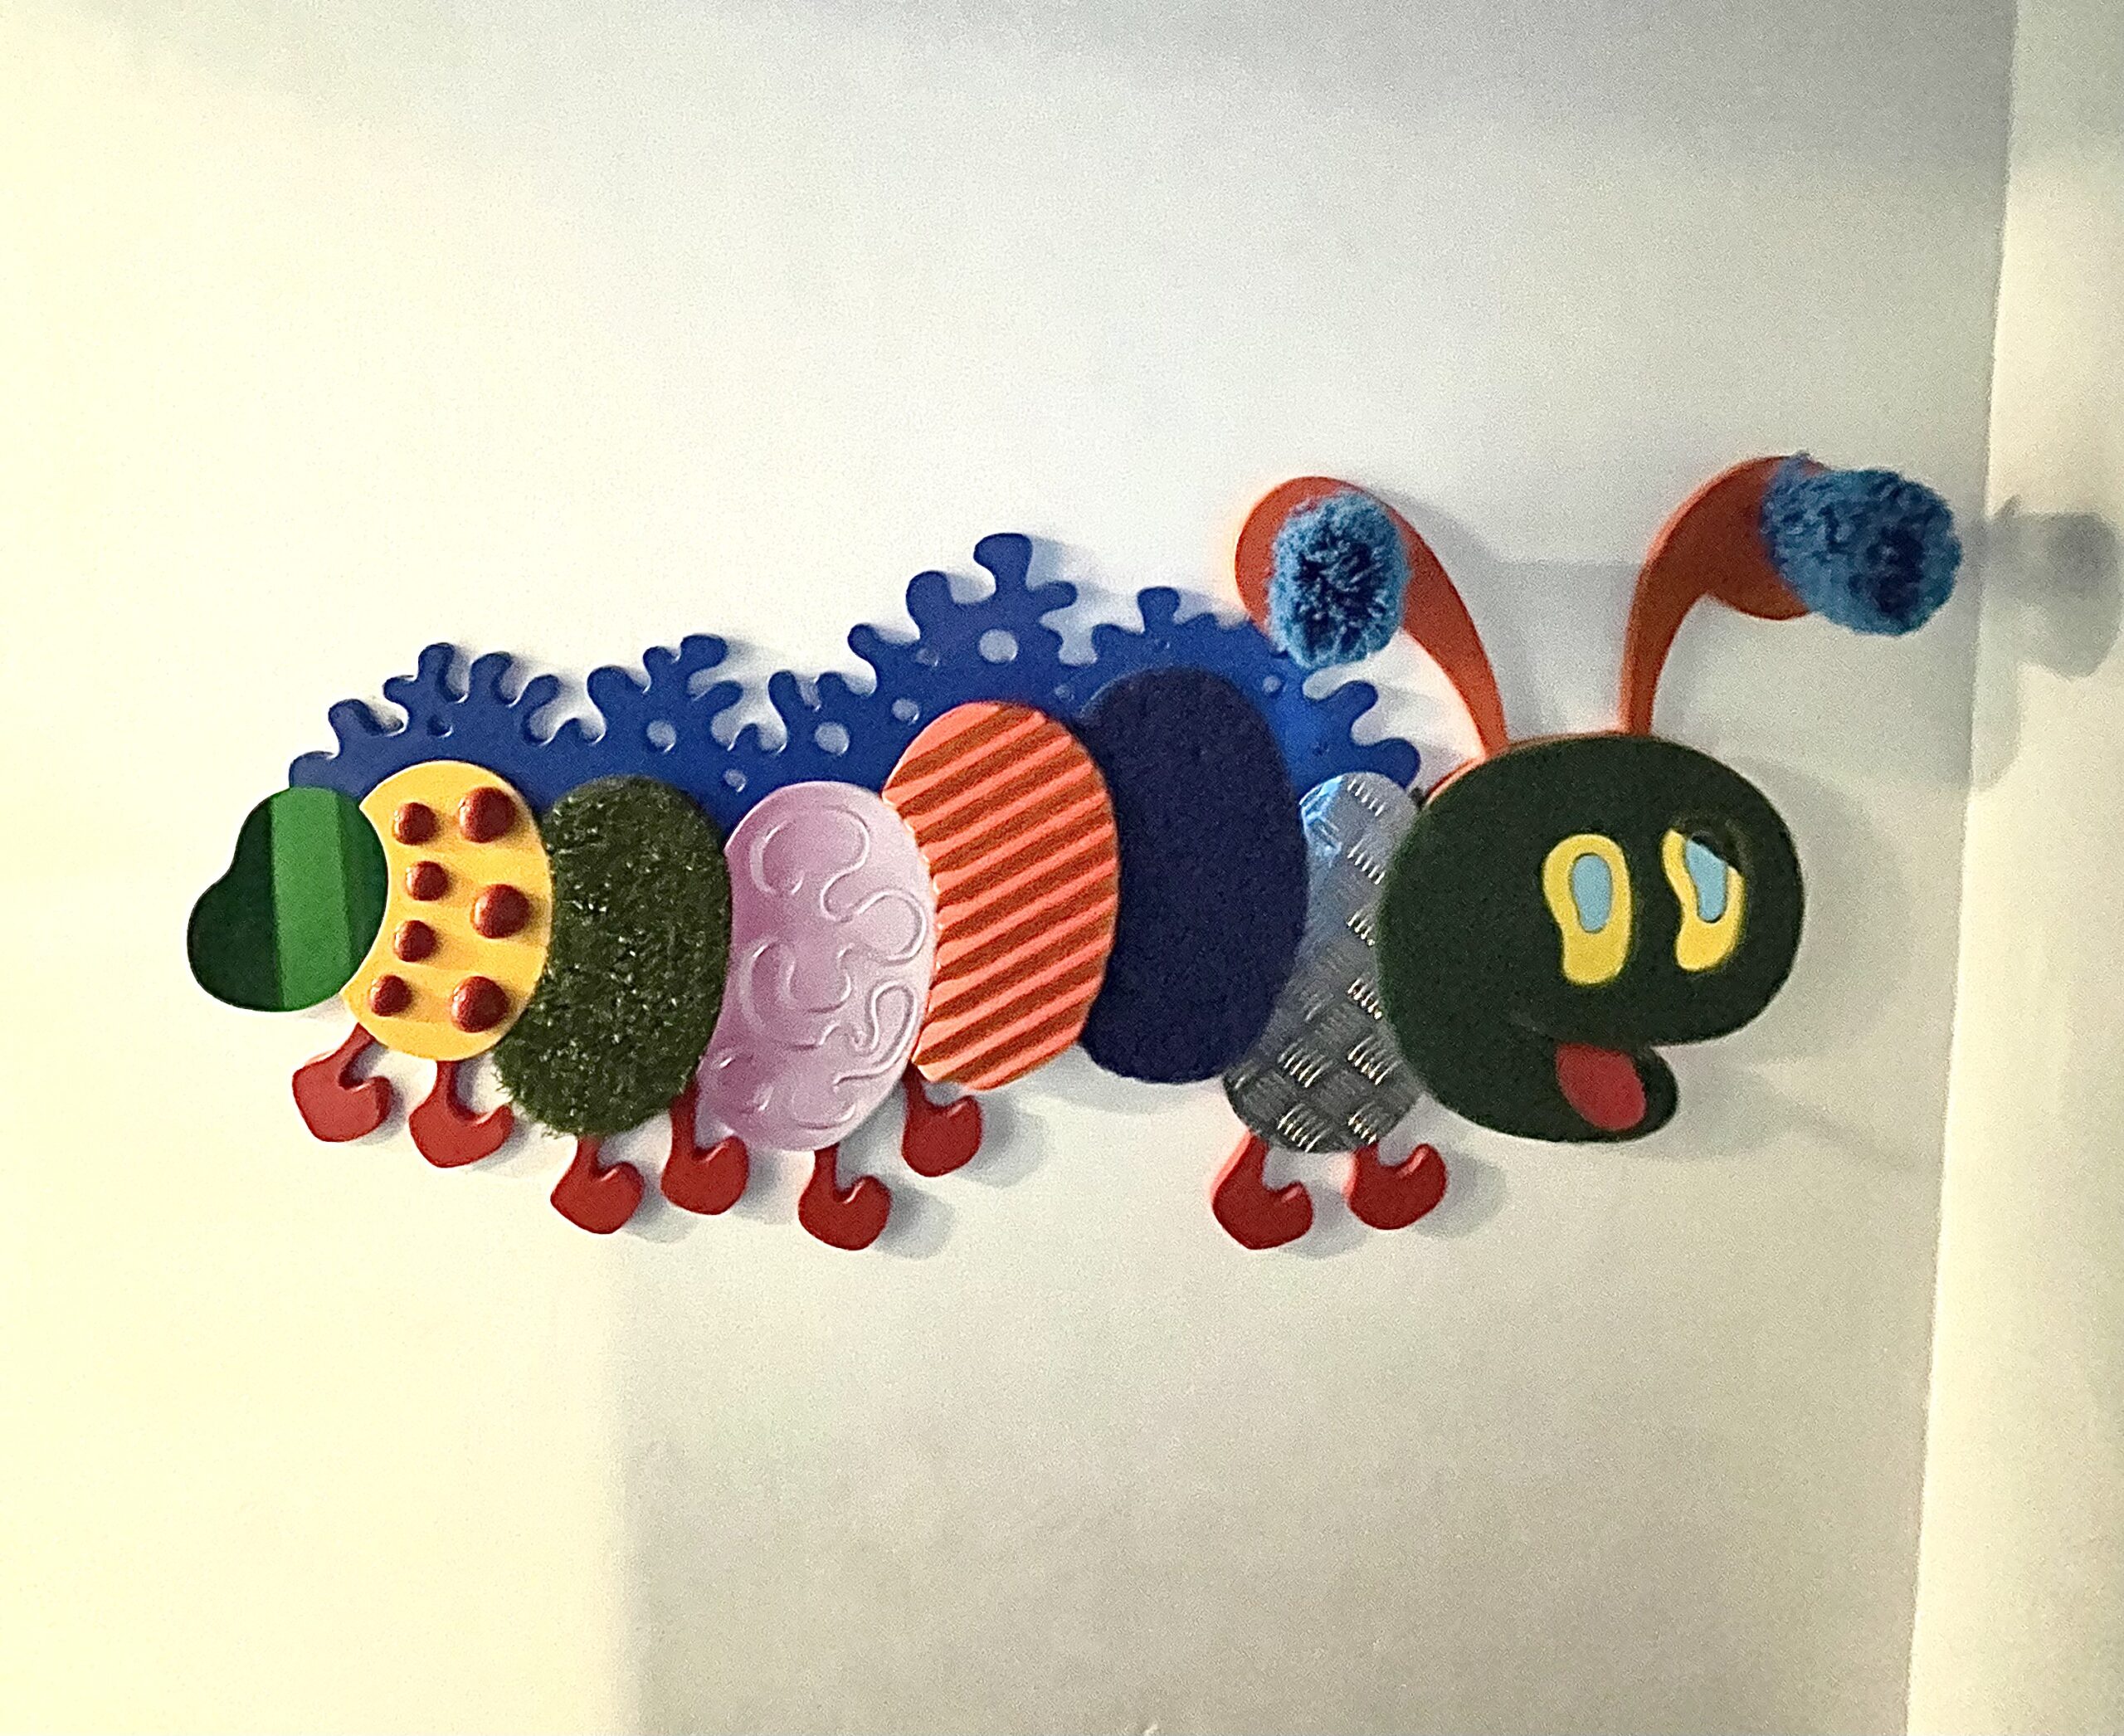 Wargrave House School sensory room caterpillar